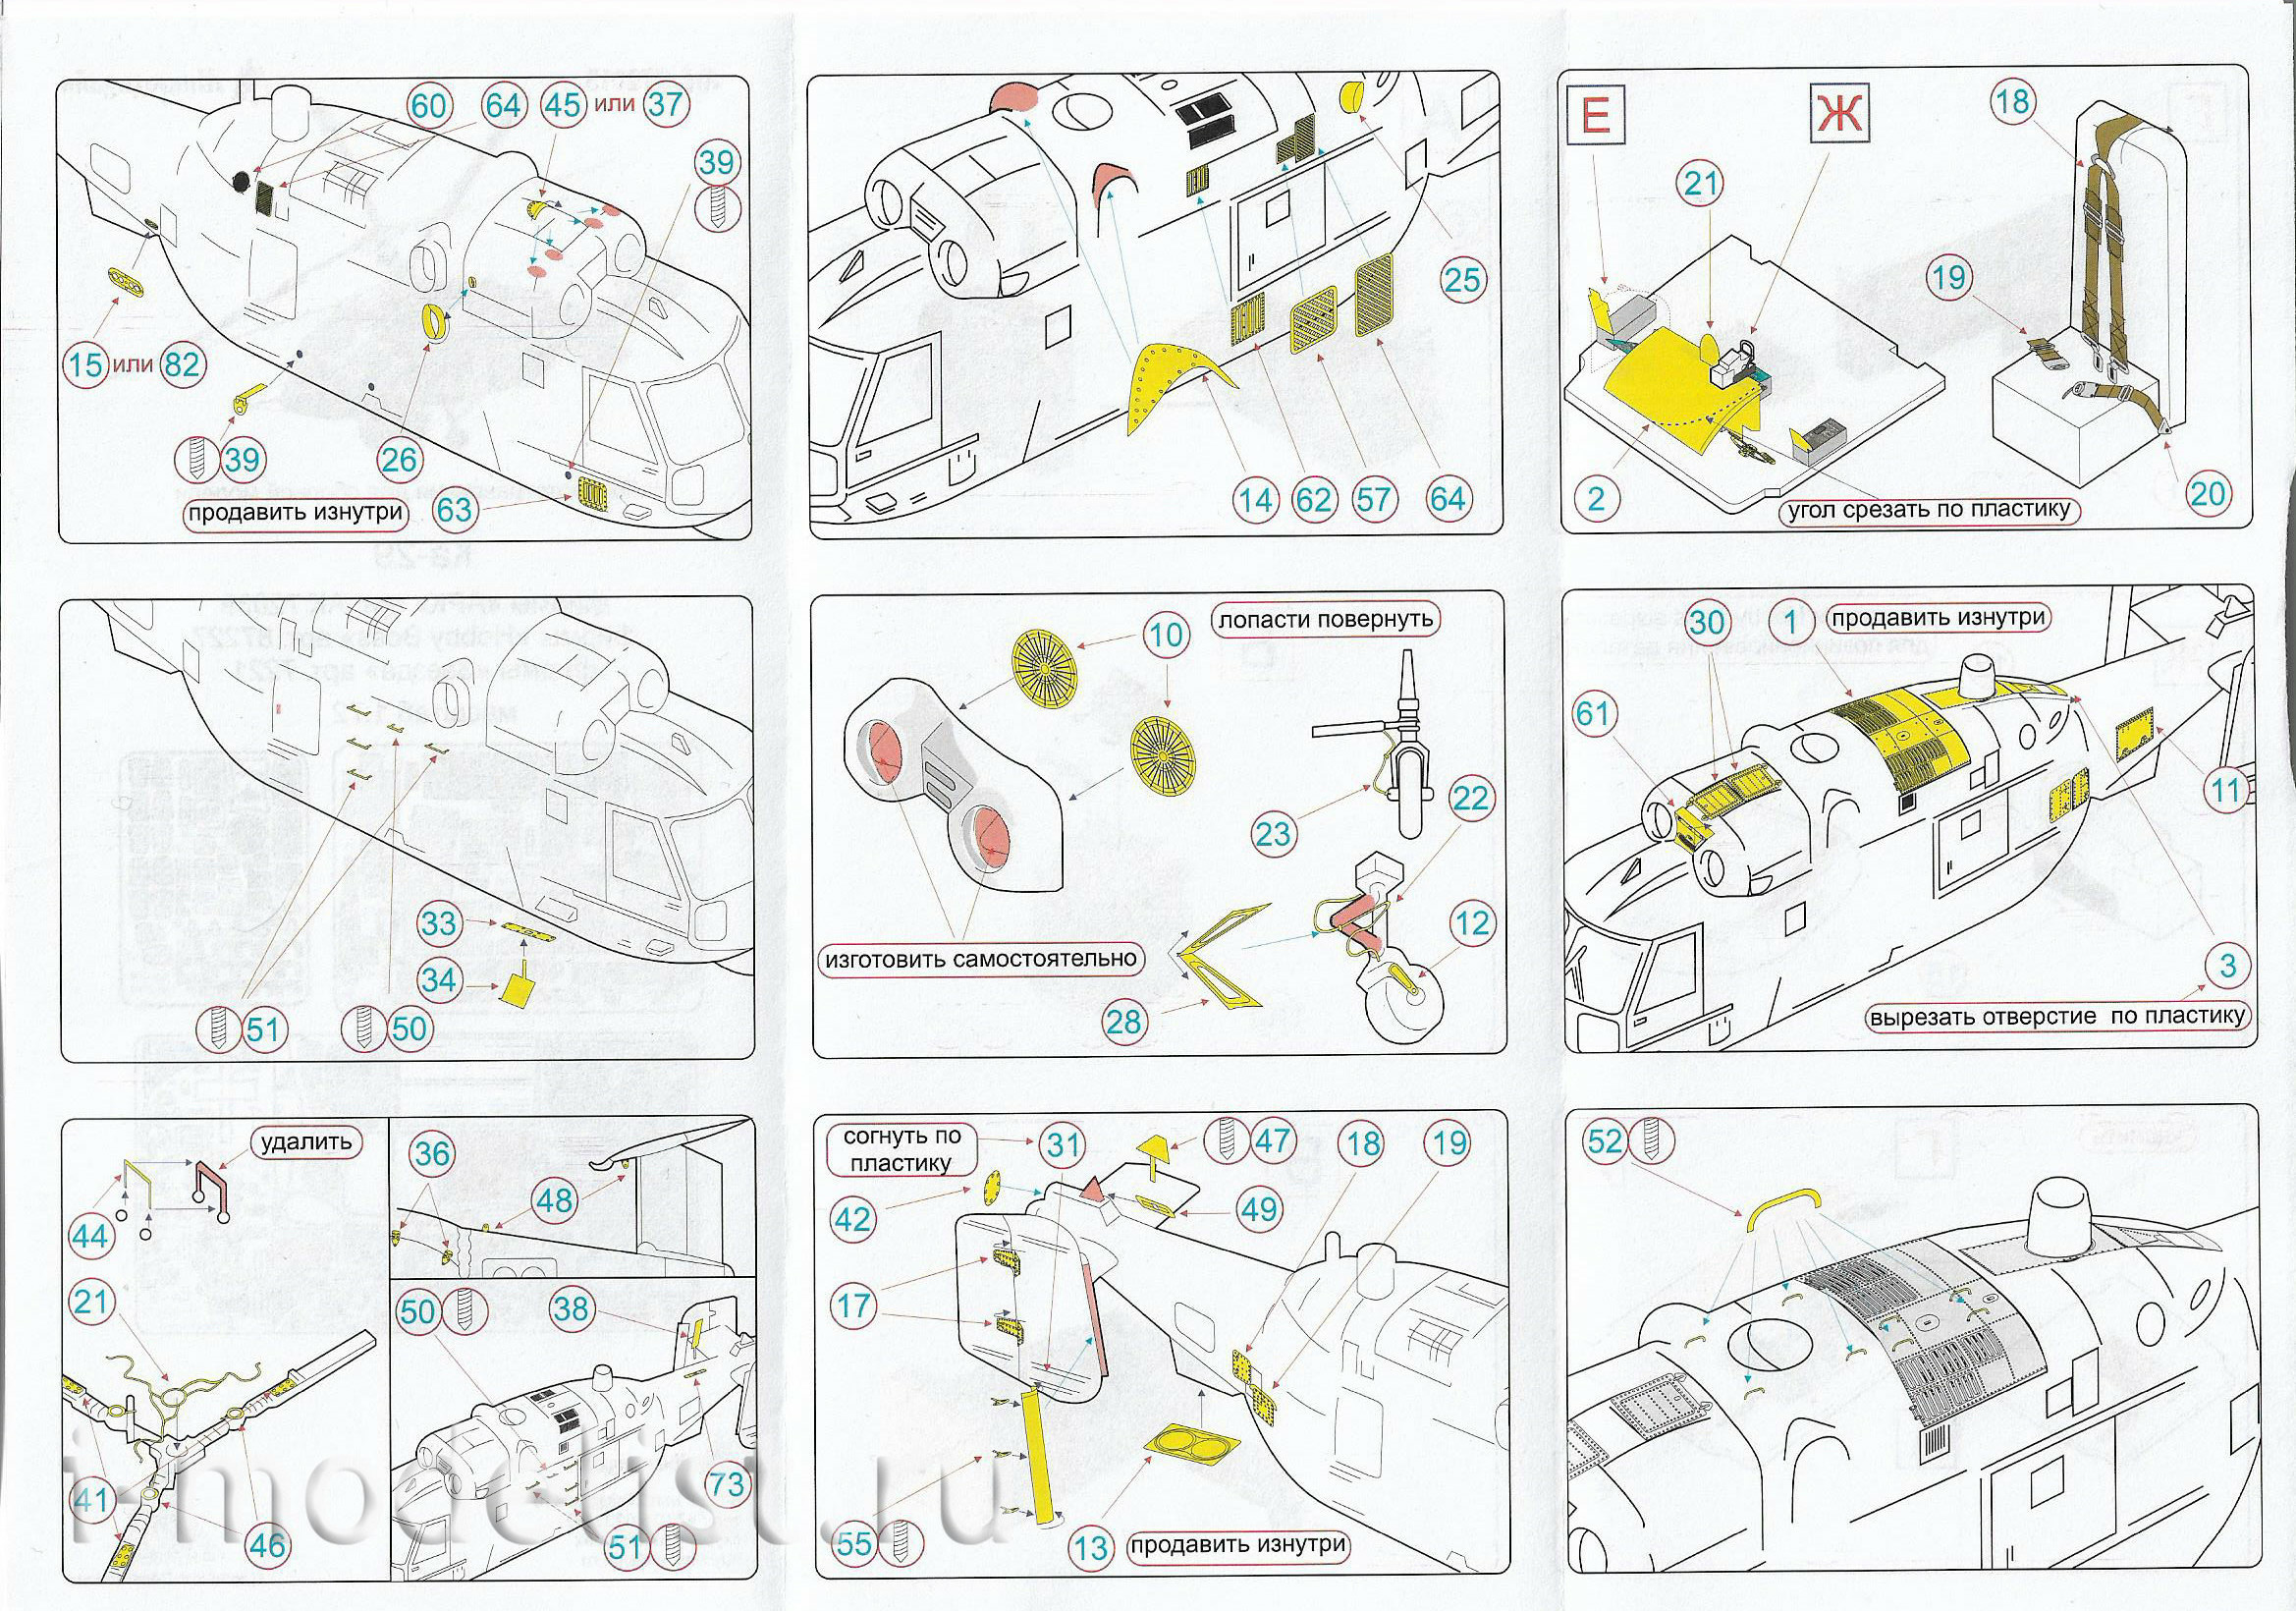 072013 Microdesign 1/72 Photo Etching Kit for K@-29 (Zvezda) Color Dashboards